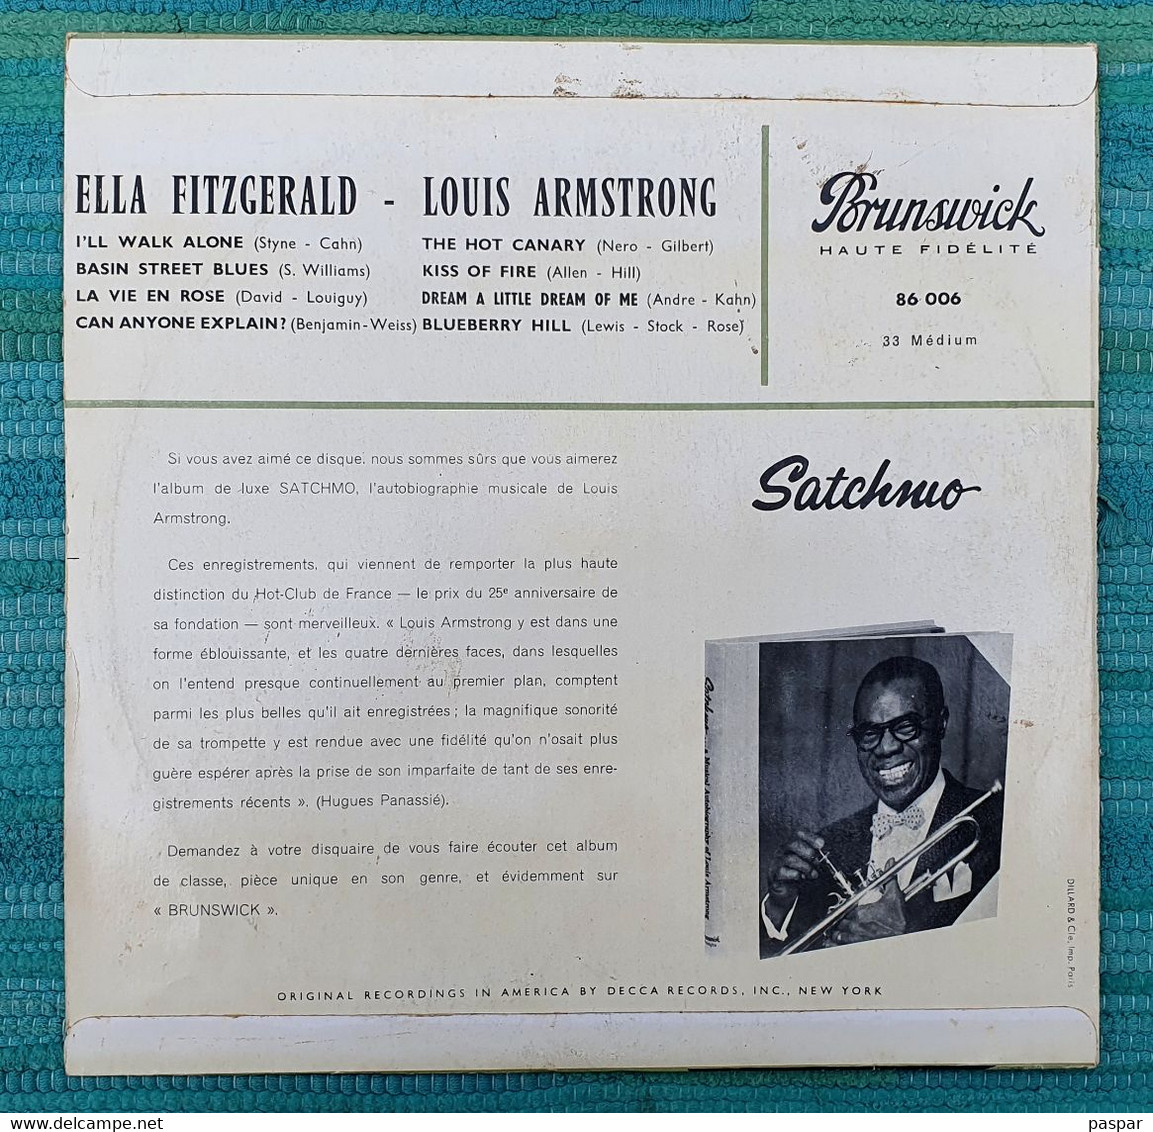 Ella Fitzgerald / Louis Amstrong - Brunswick - Decca Records - Jazz